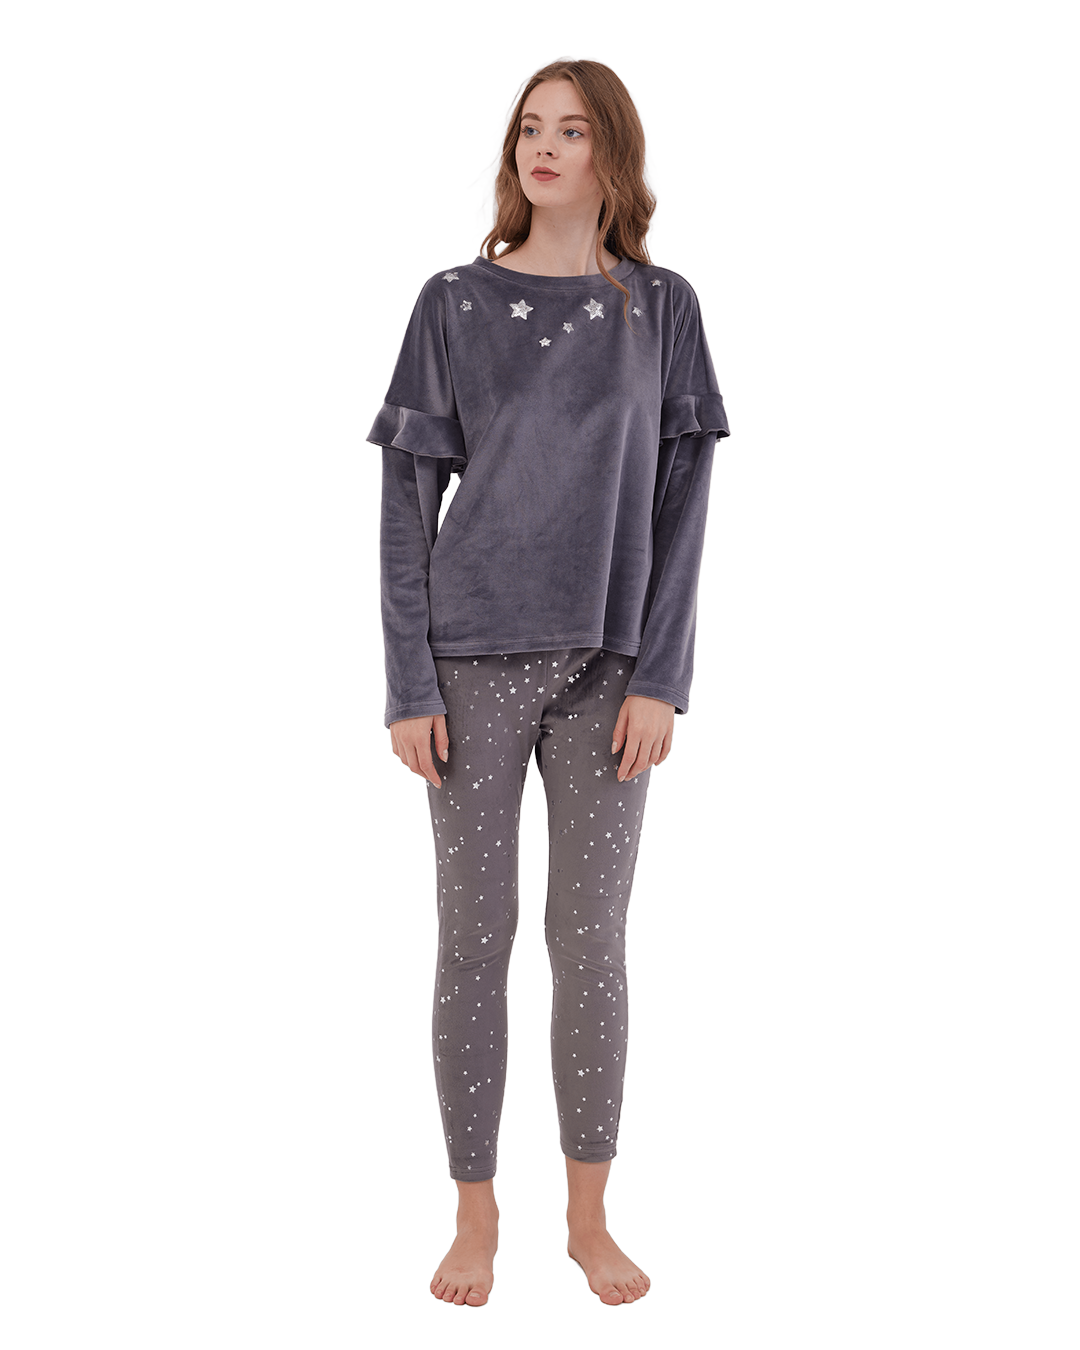 Star Foil Full Winter Pajama Arms Gray